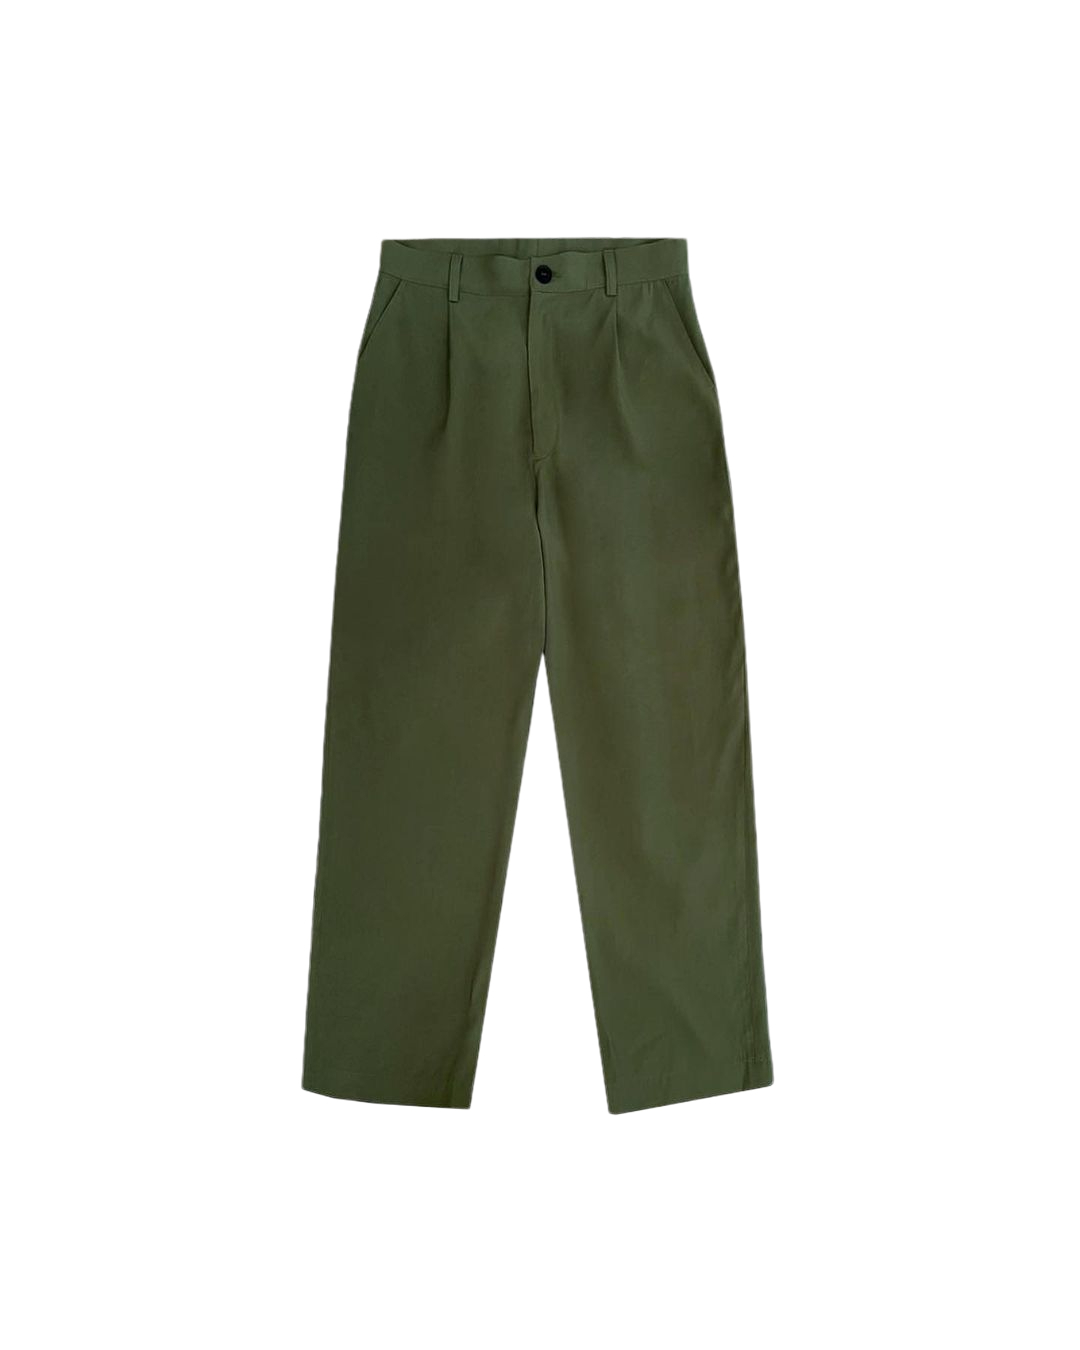 Zartorial Straight Trousers (Green)